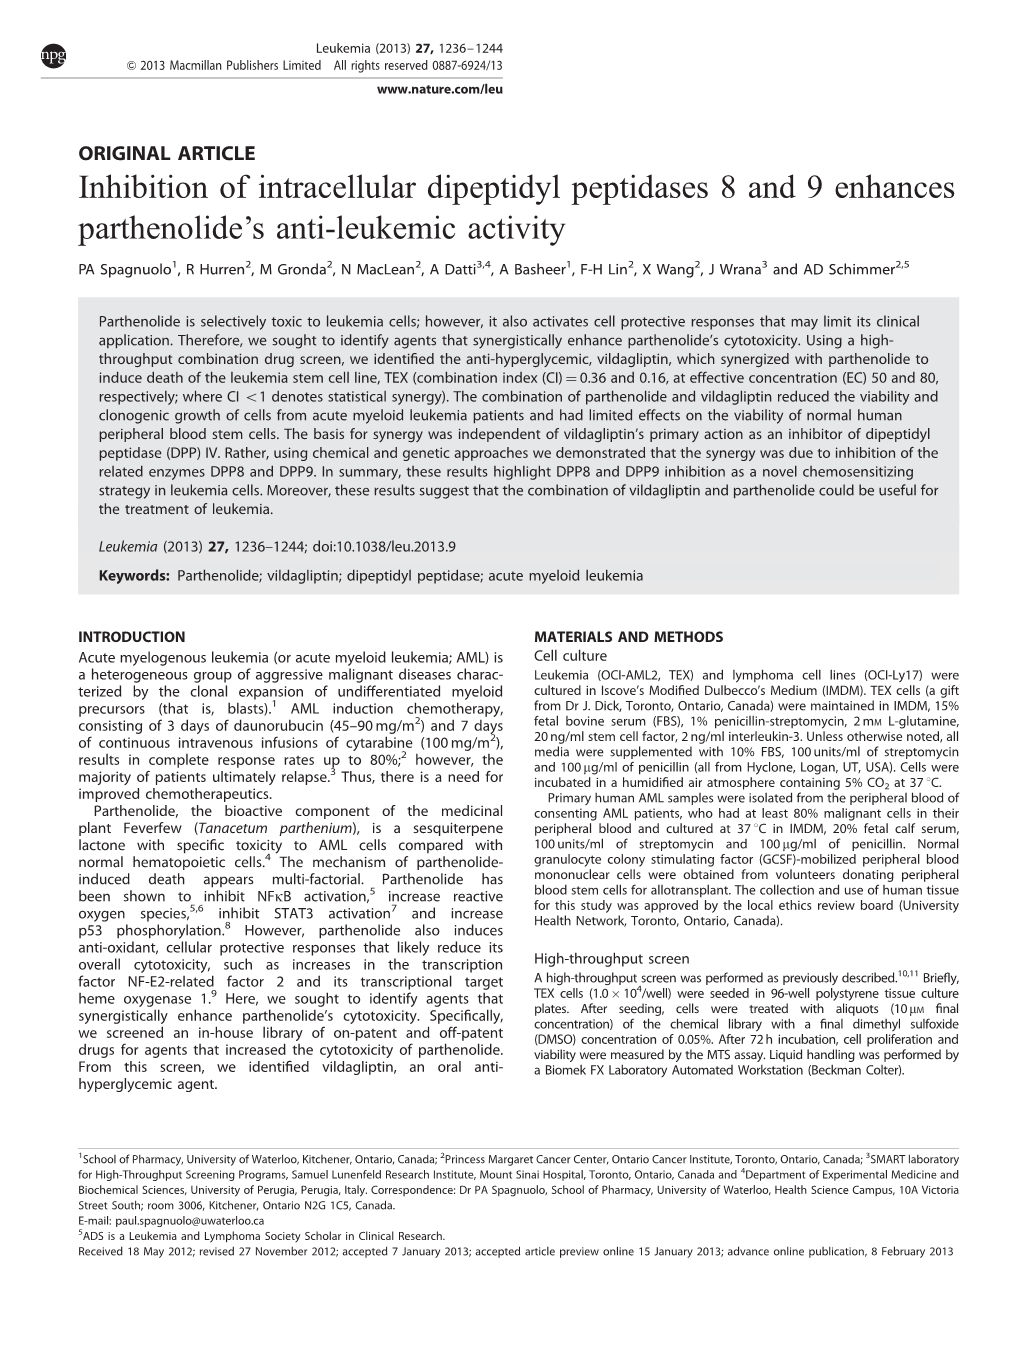 Inhibition of Intracellular Dipeptidyl Peptidases 8 and 9 Enhances Parthenolide’S Anti-Leukemic Activity